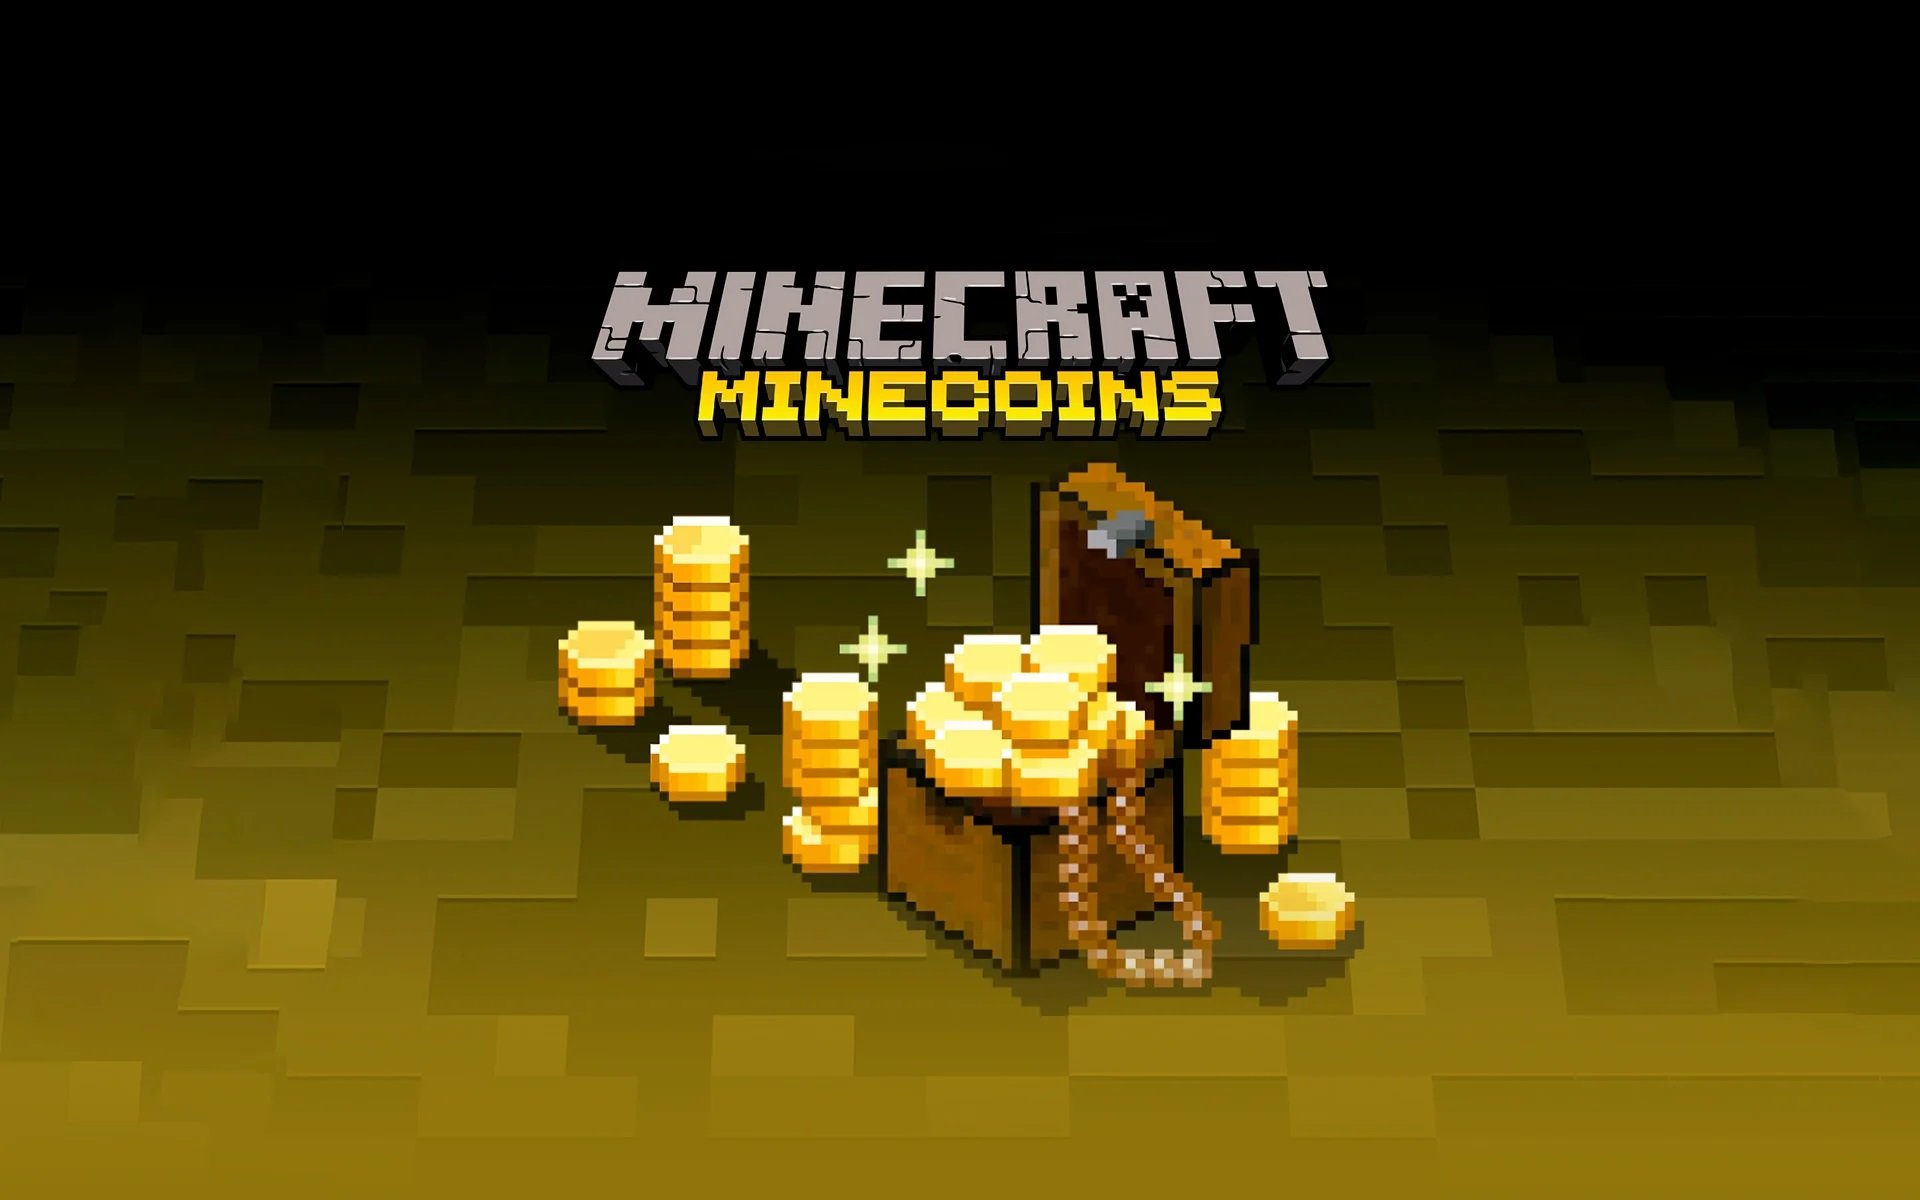 Minecraft: Minecoins Pack: 1720 Coins - Xbox One, Windows